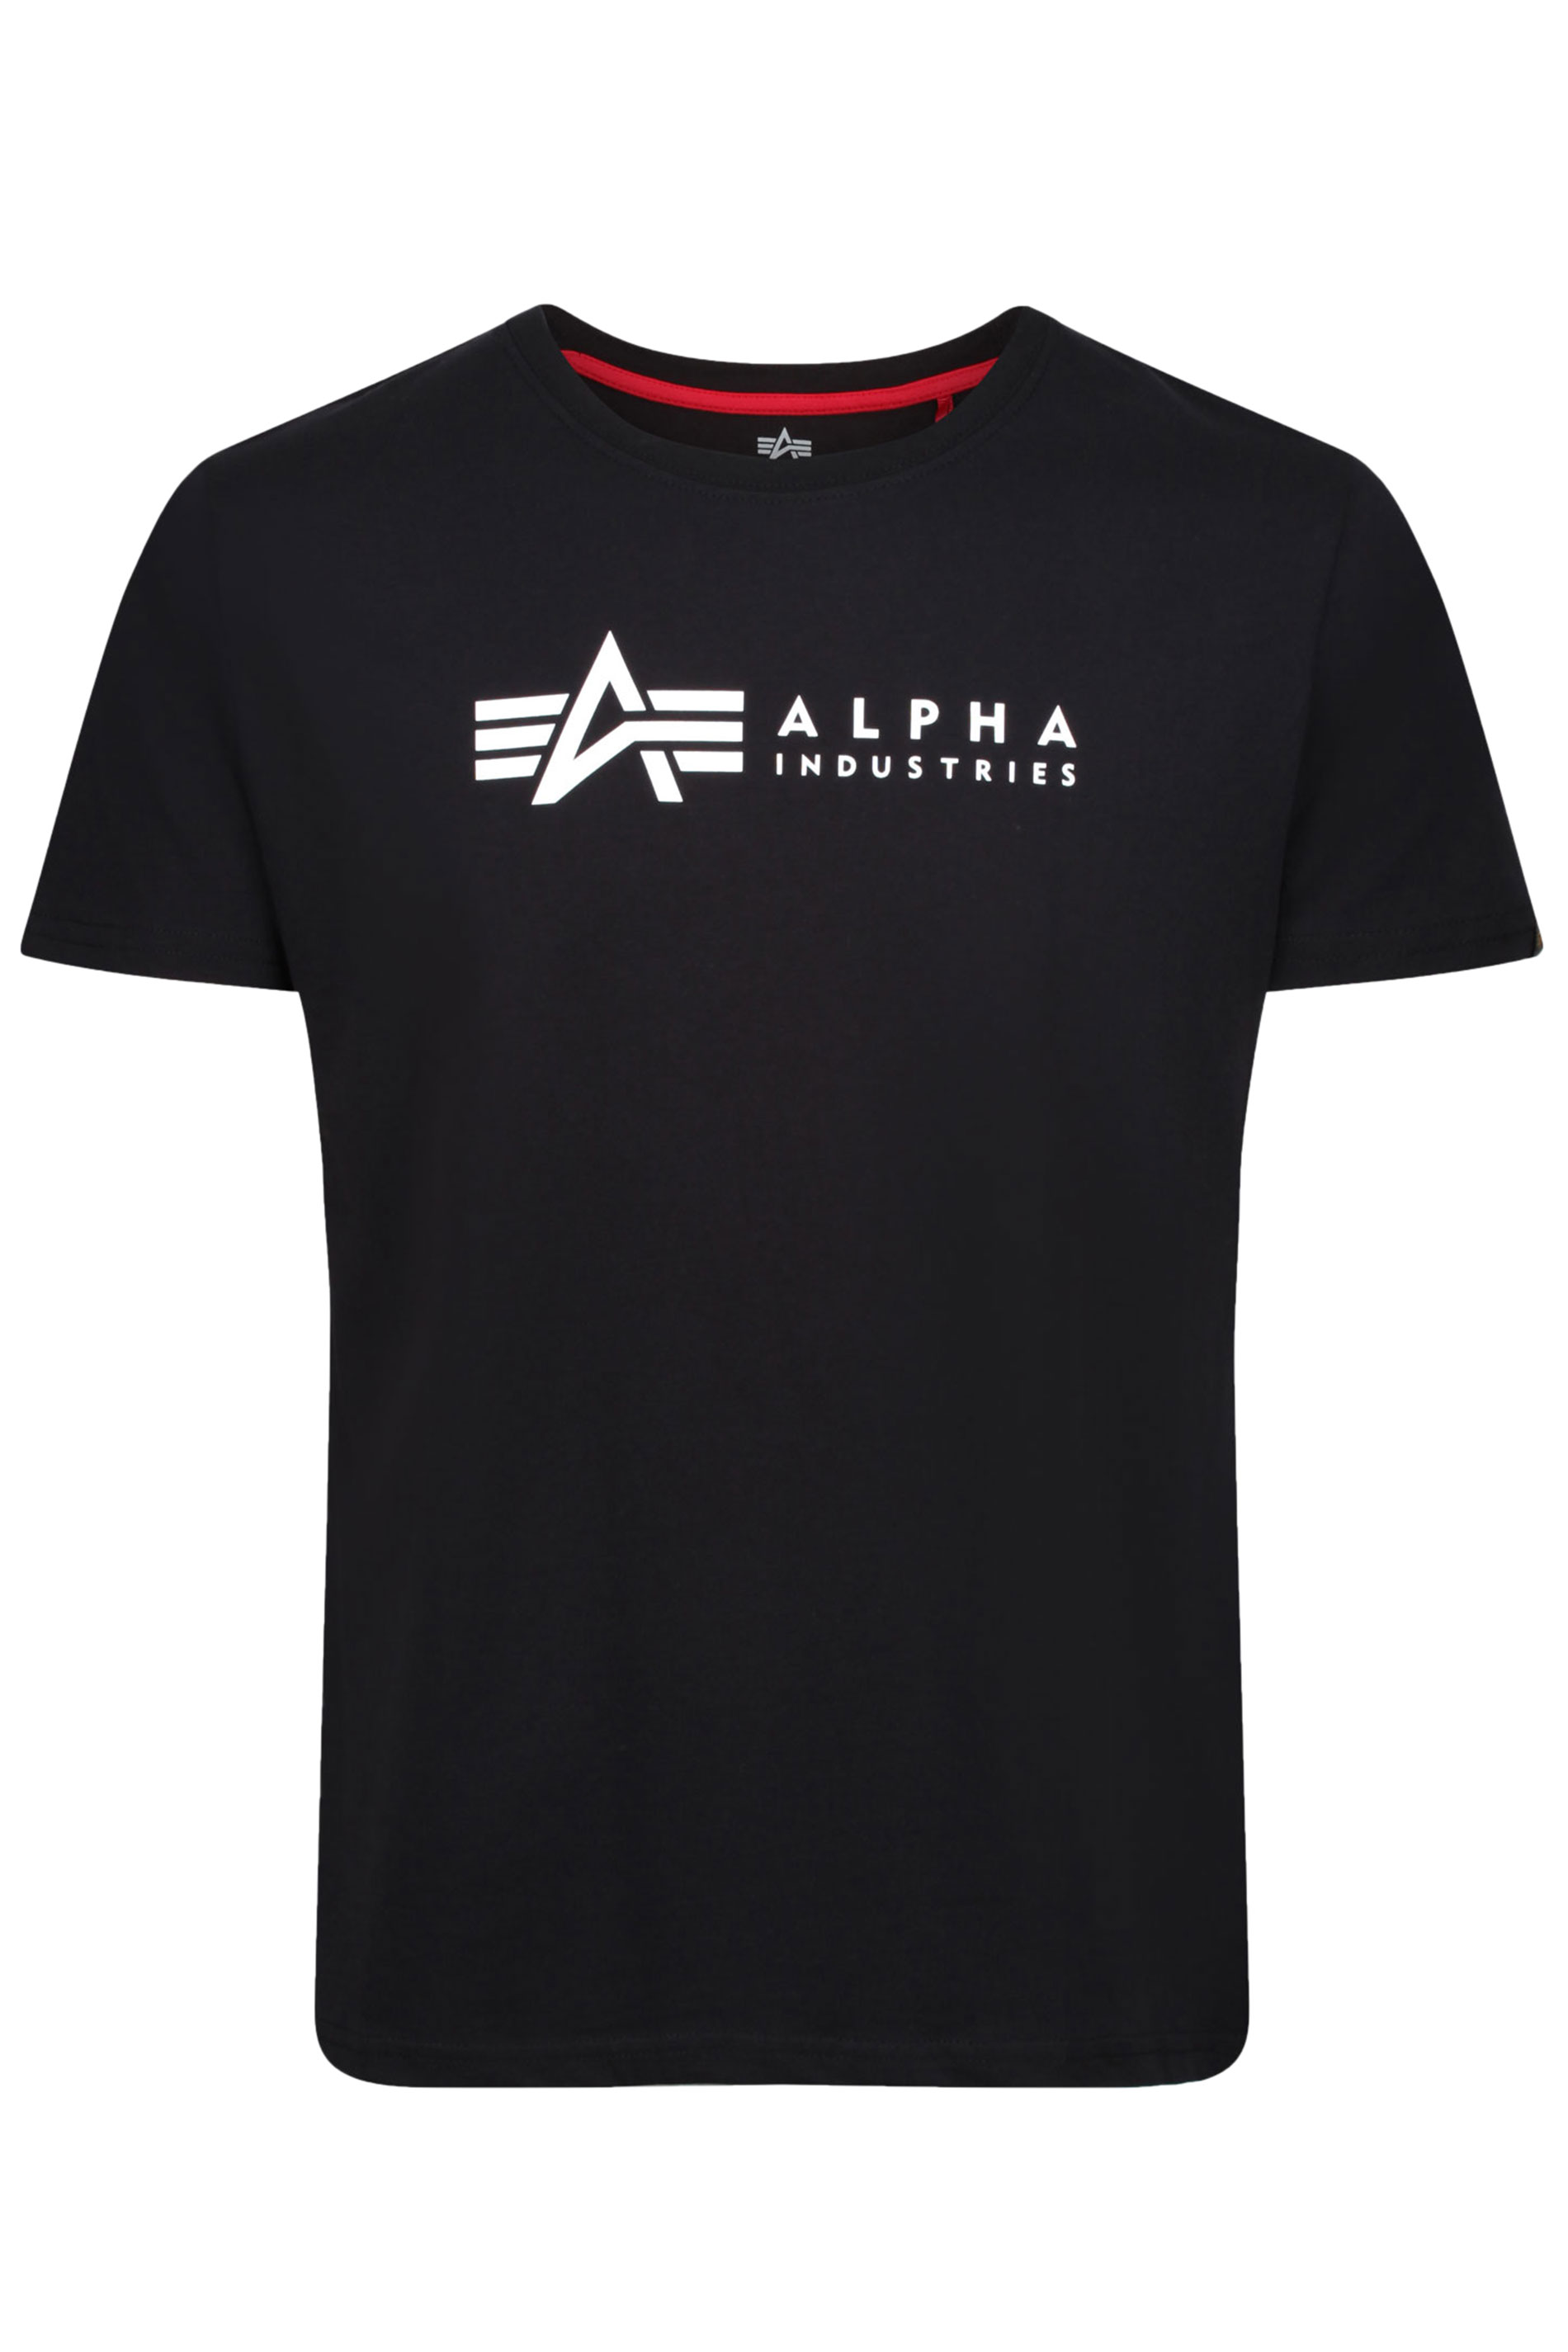 T-Shirts Black 2 BadRhino ALPHA PACK Logo INDUSTRIES |